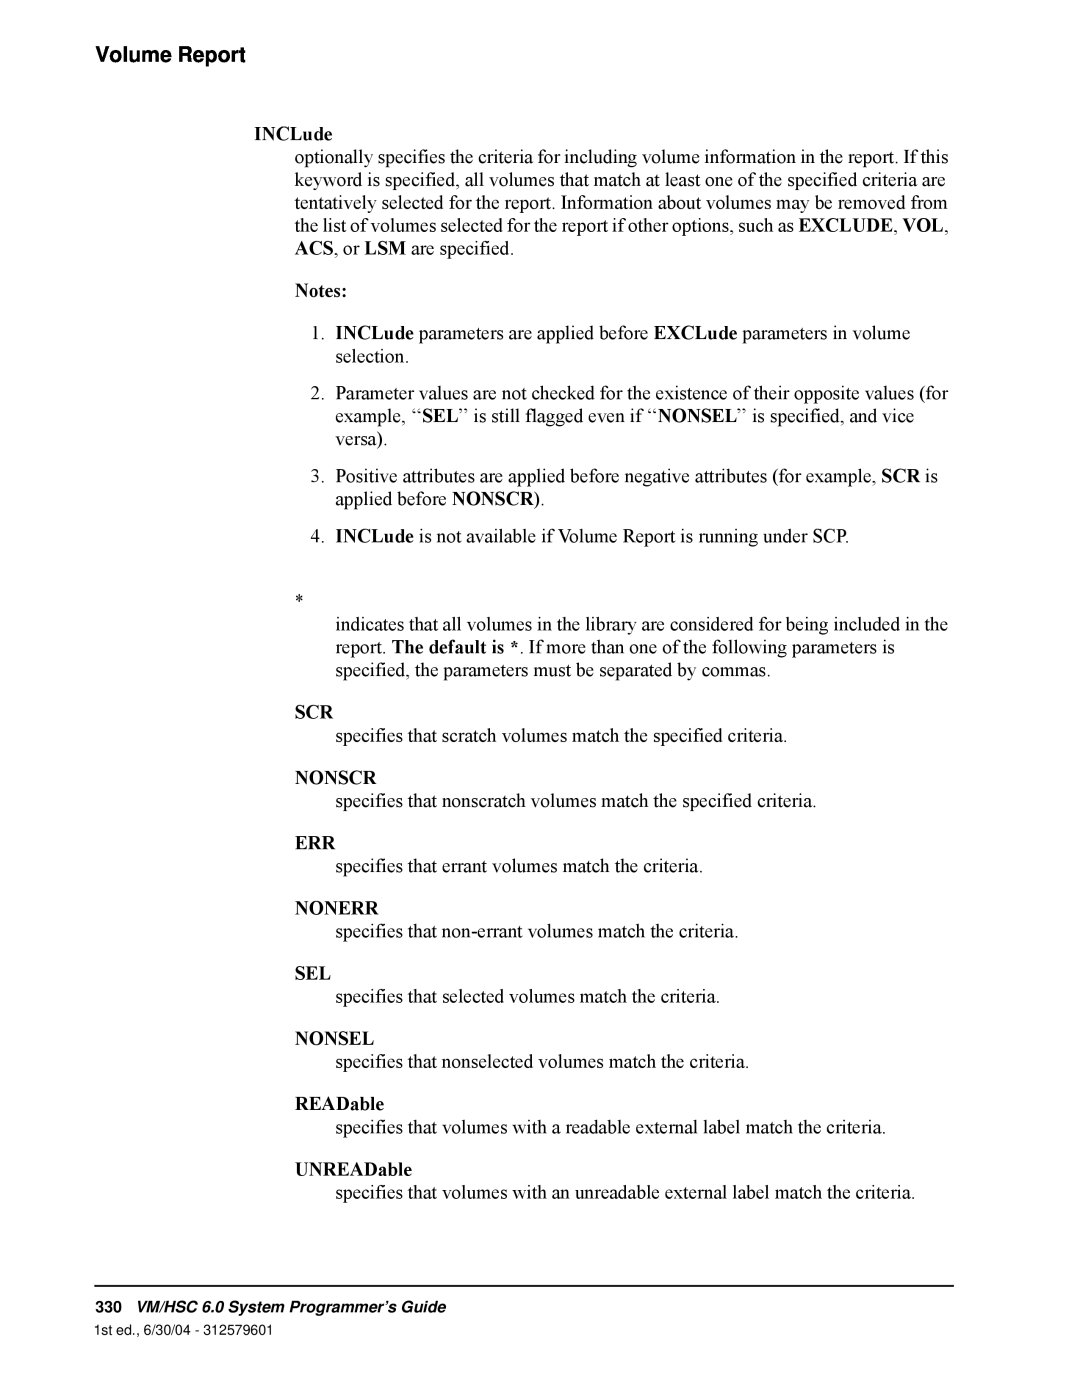 StorageTek 6 manual Volume Report, INCLude 